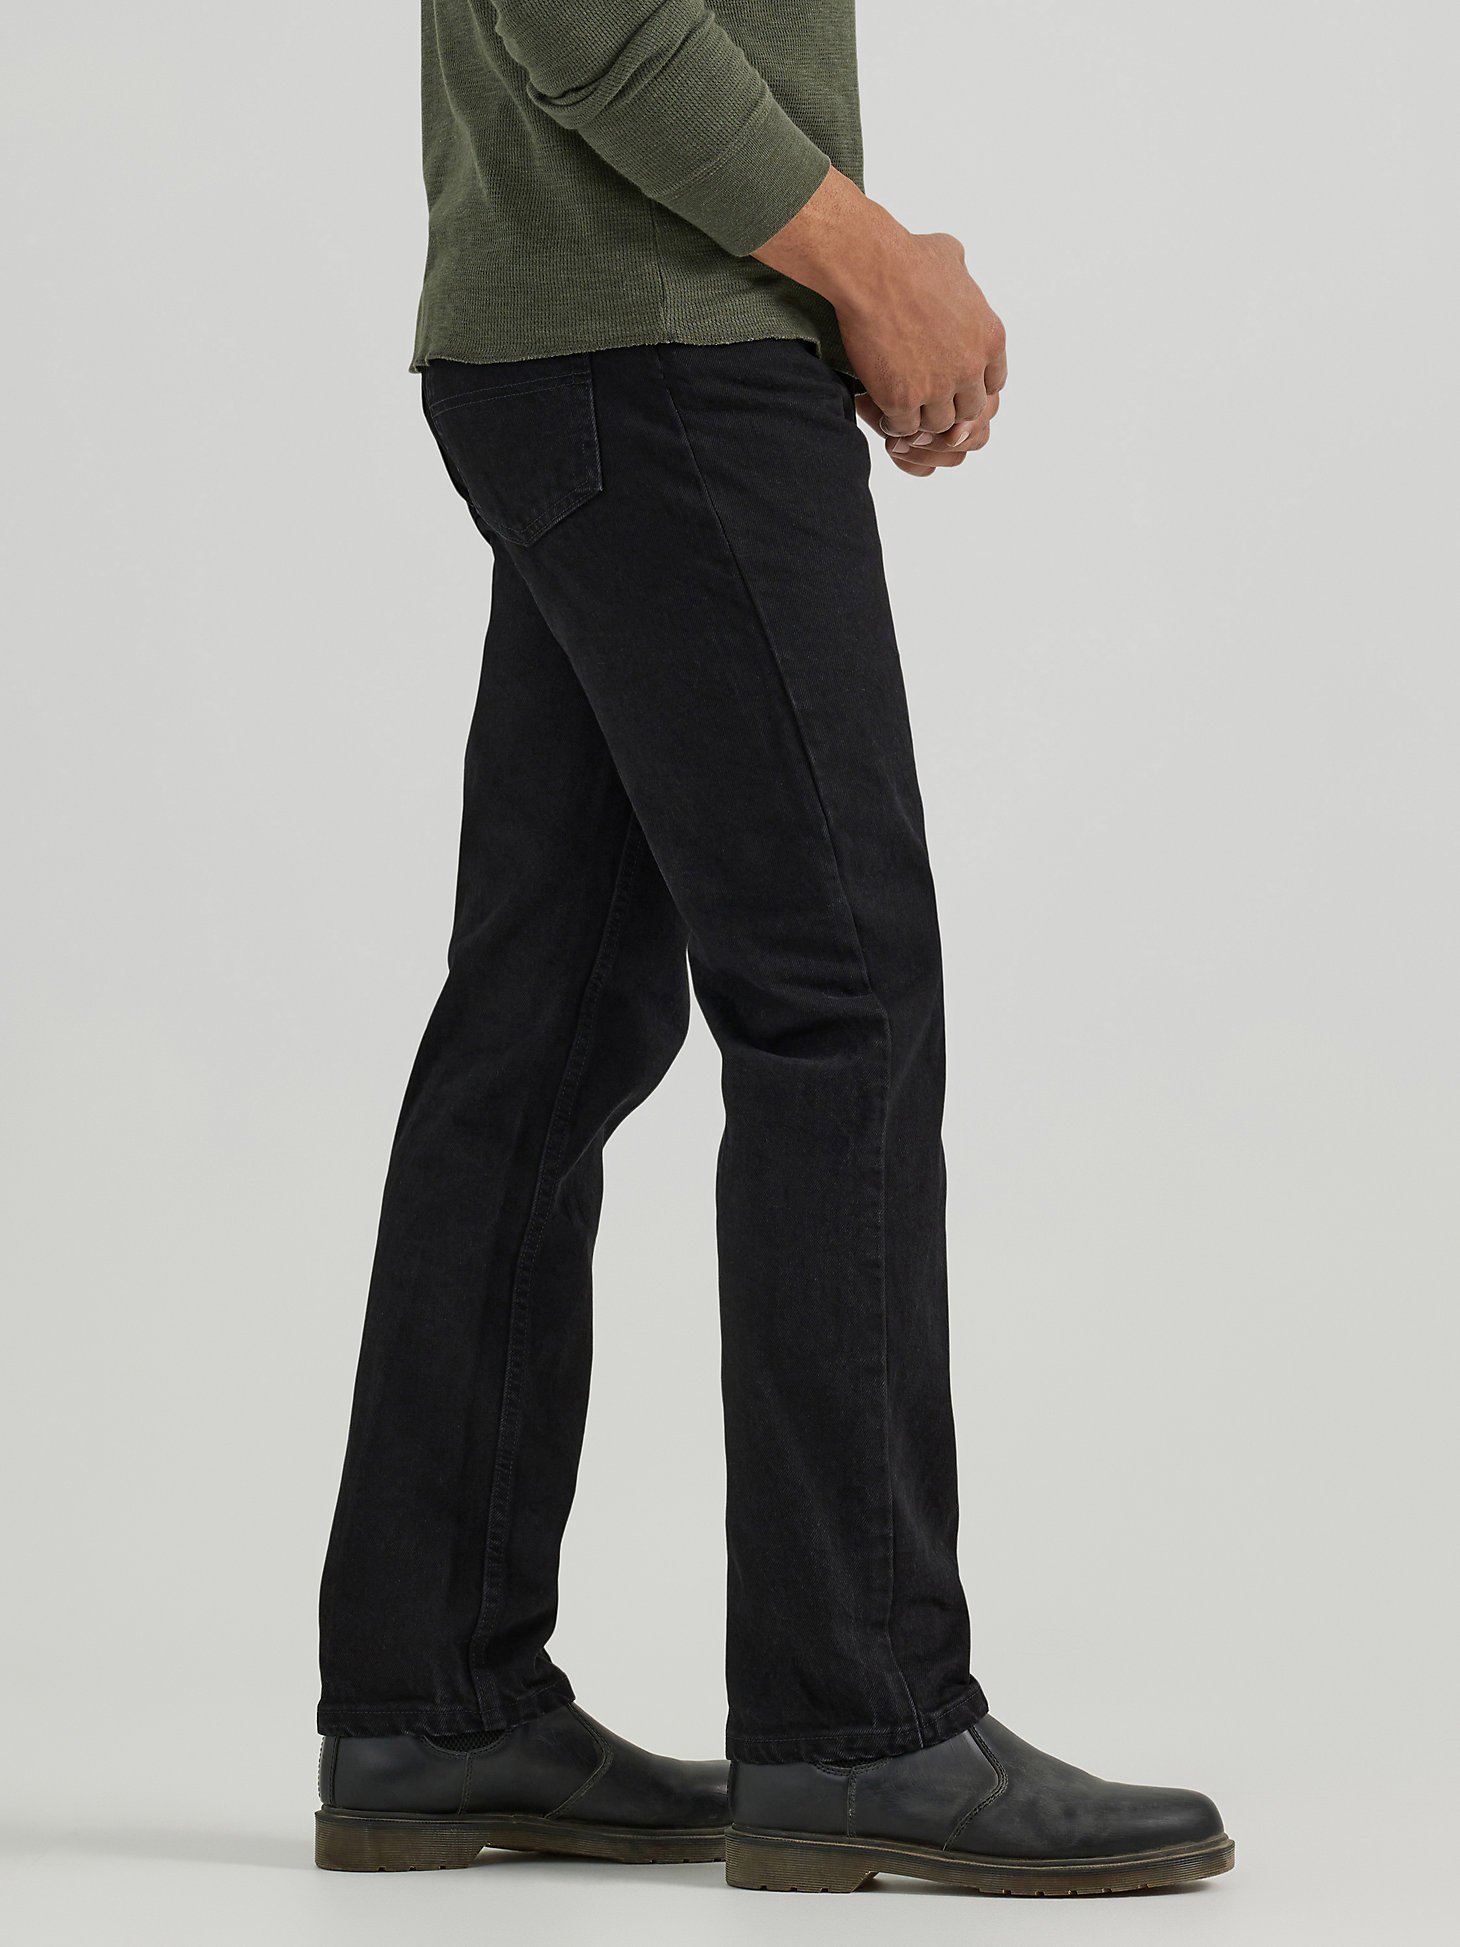 Men's Wrangler Authentics® Regular Fit Cotton Jean in Black alternative view 3